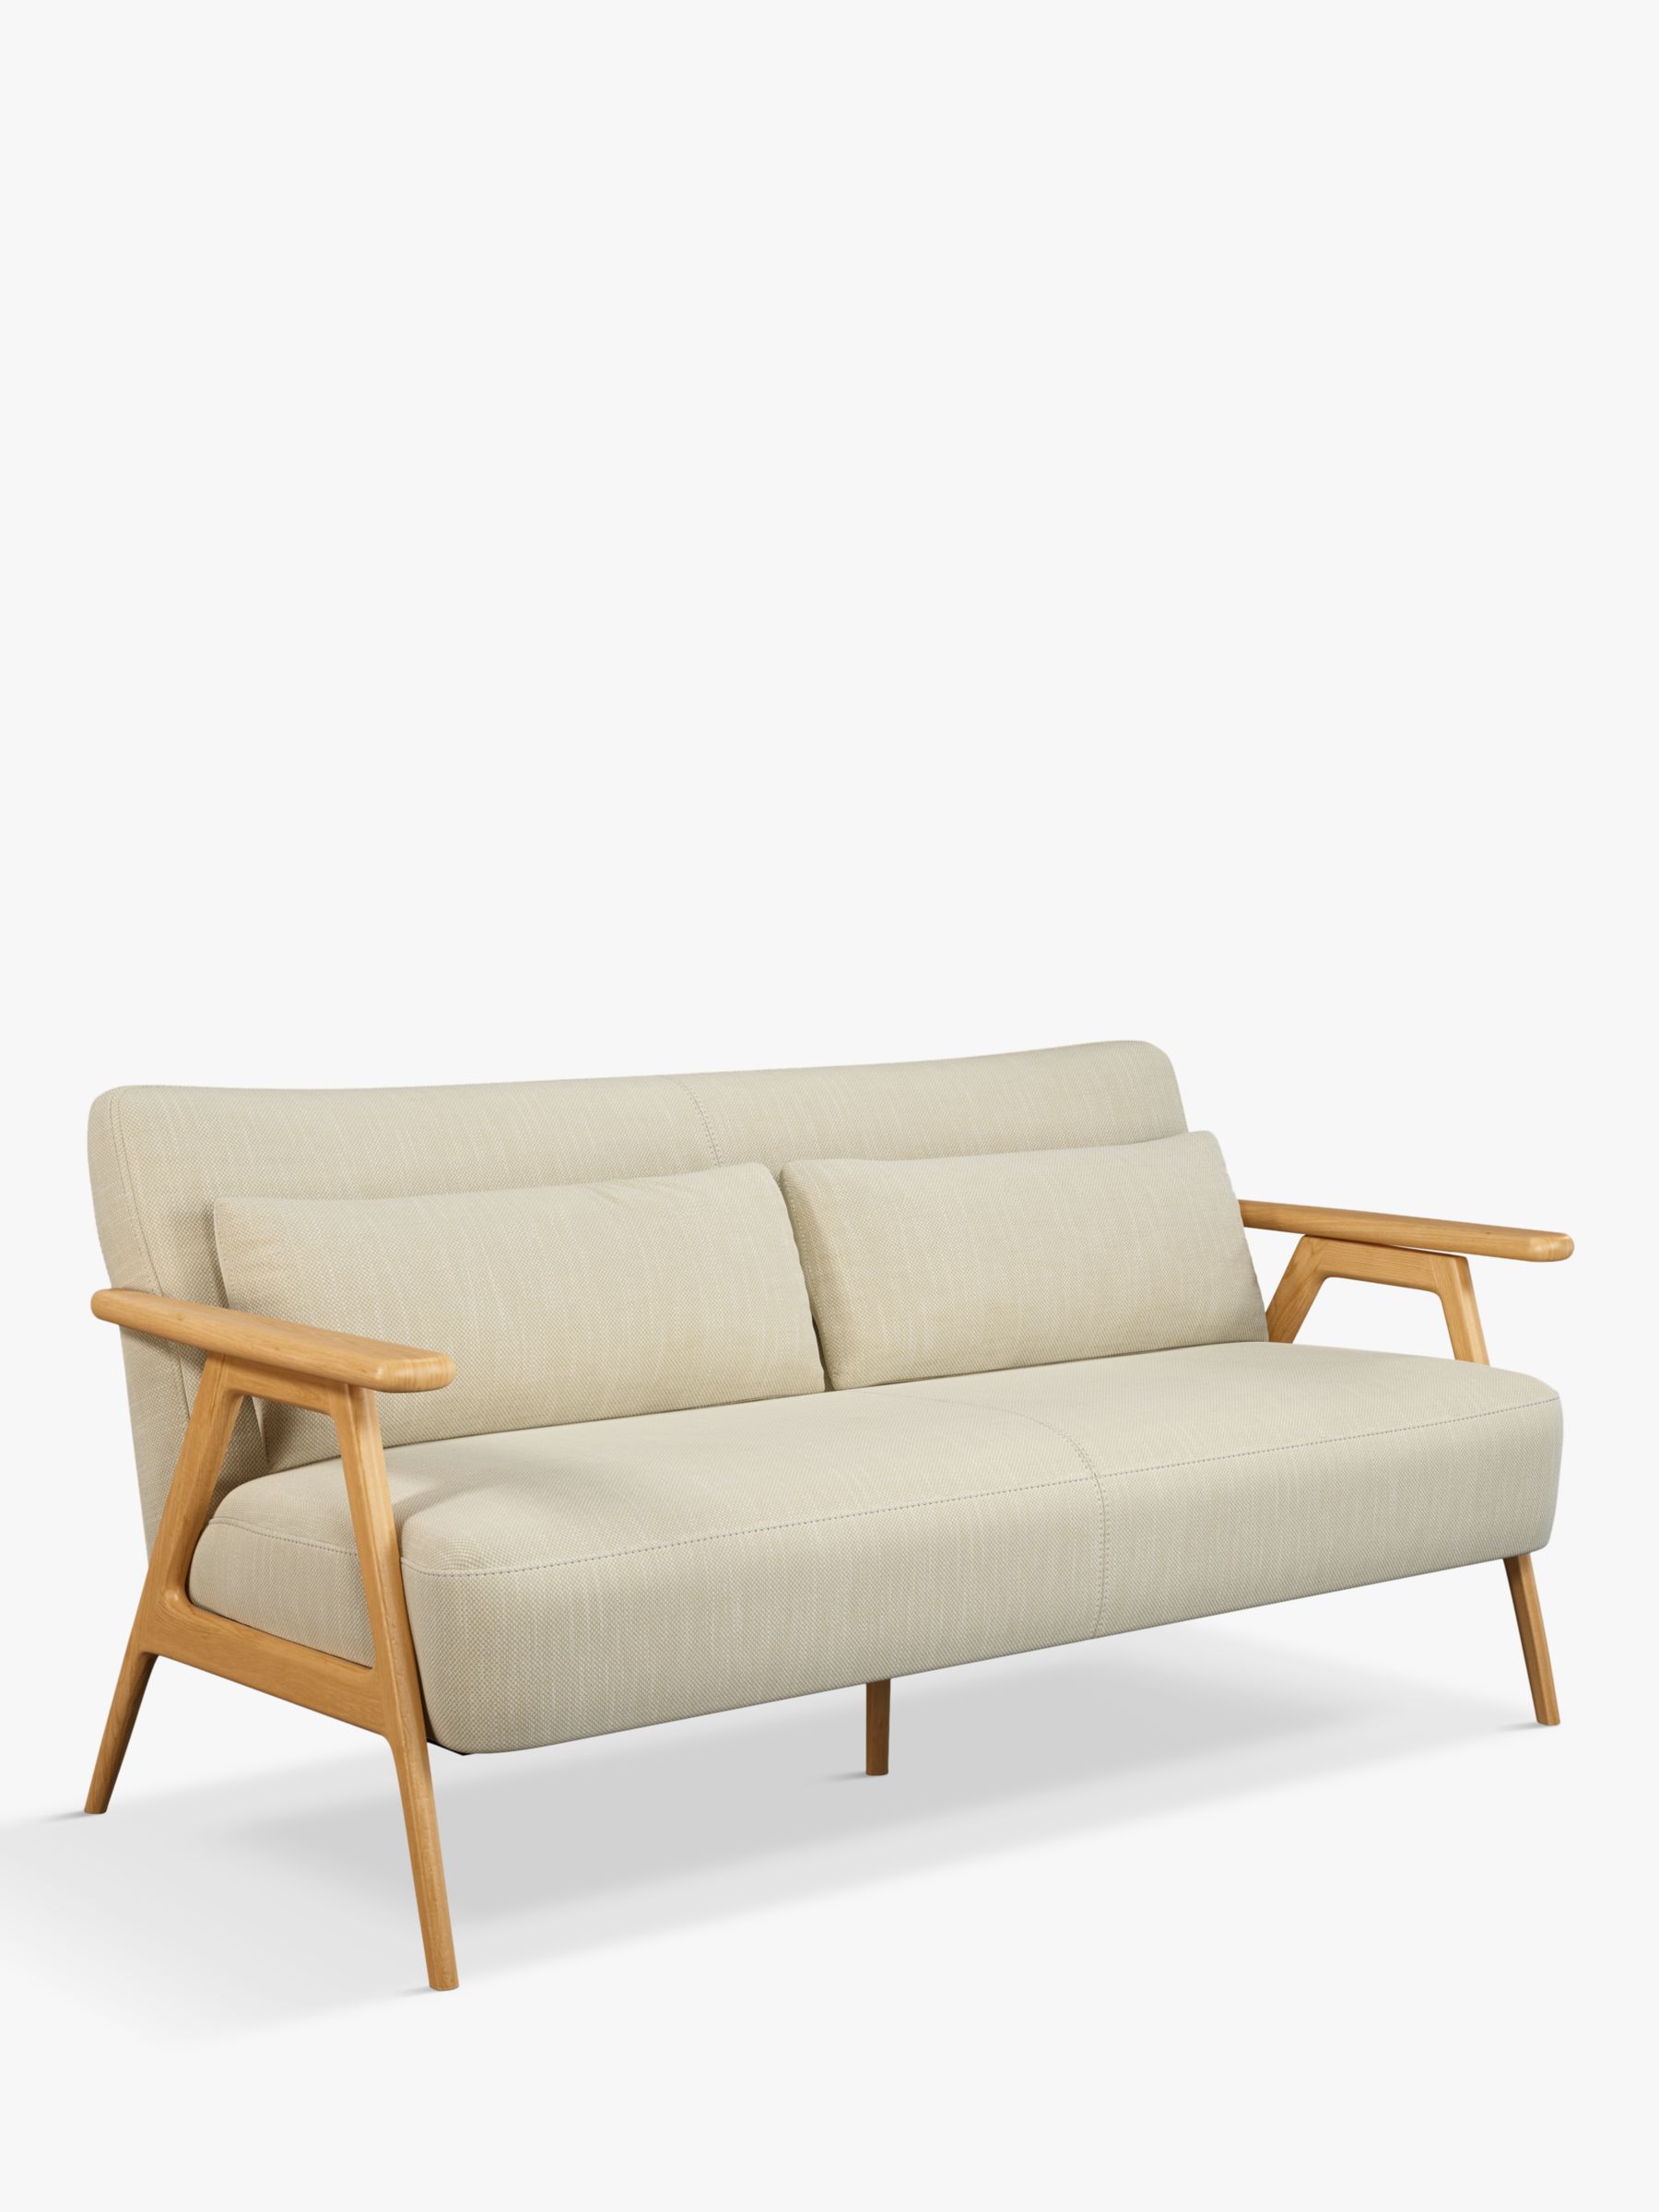 John Lewis Partners Hendricks Medium, Wooden Couch Frame